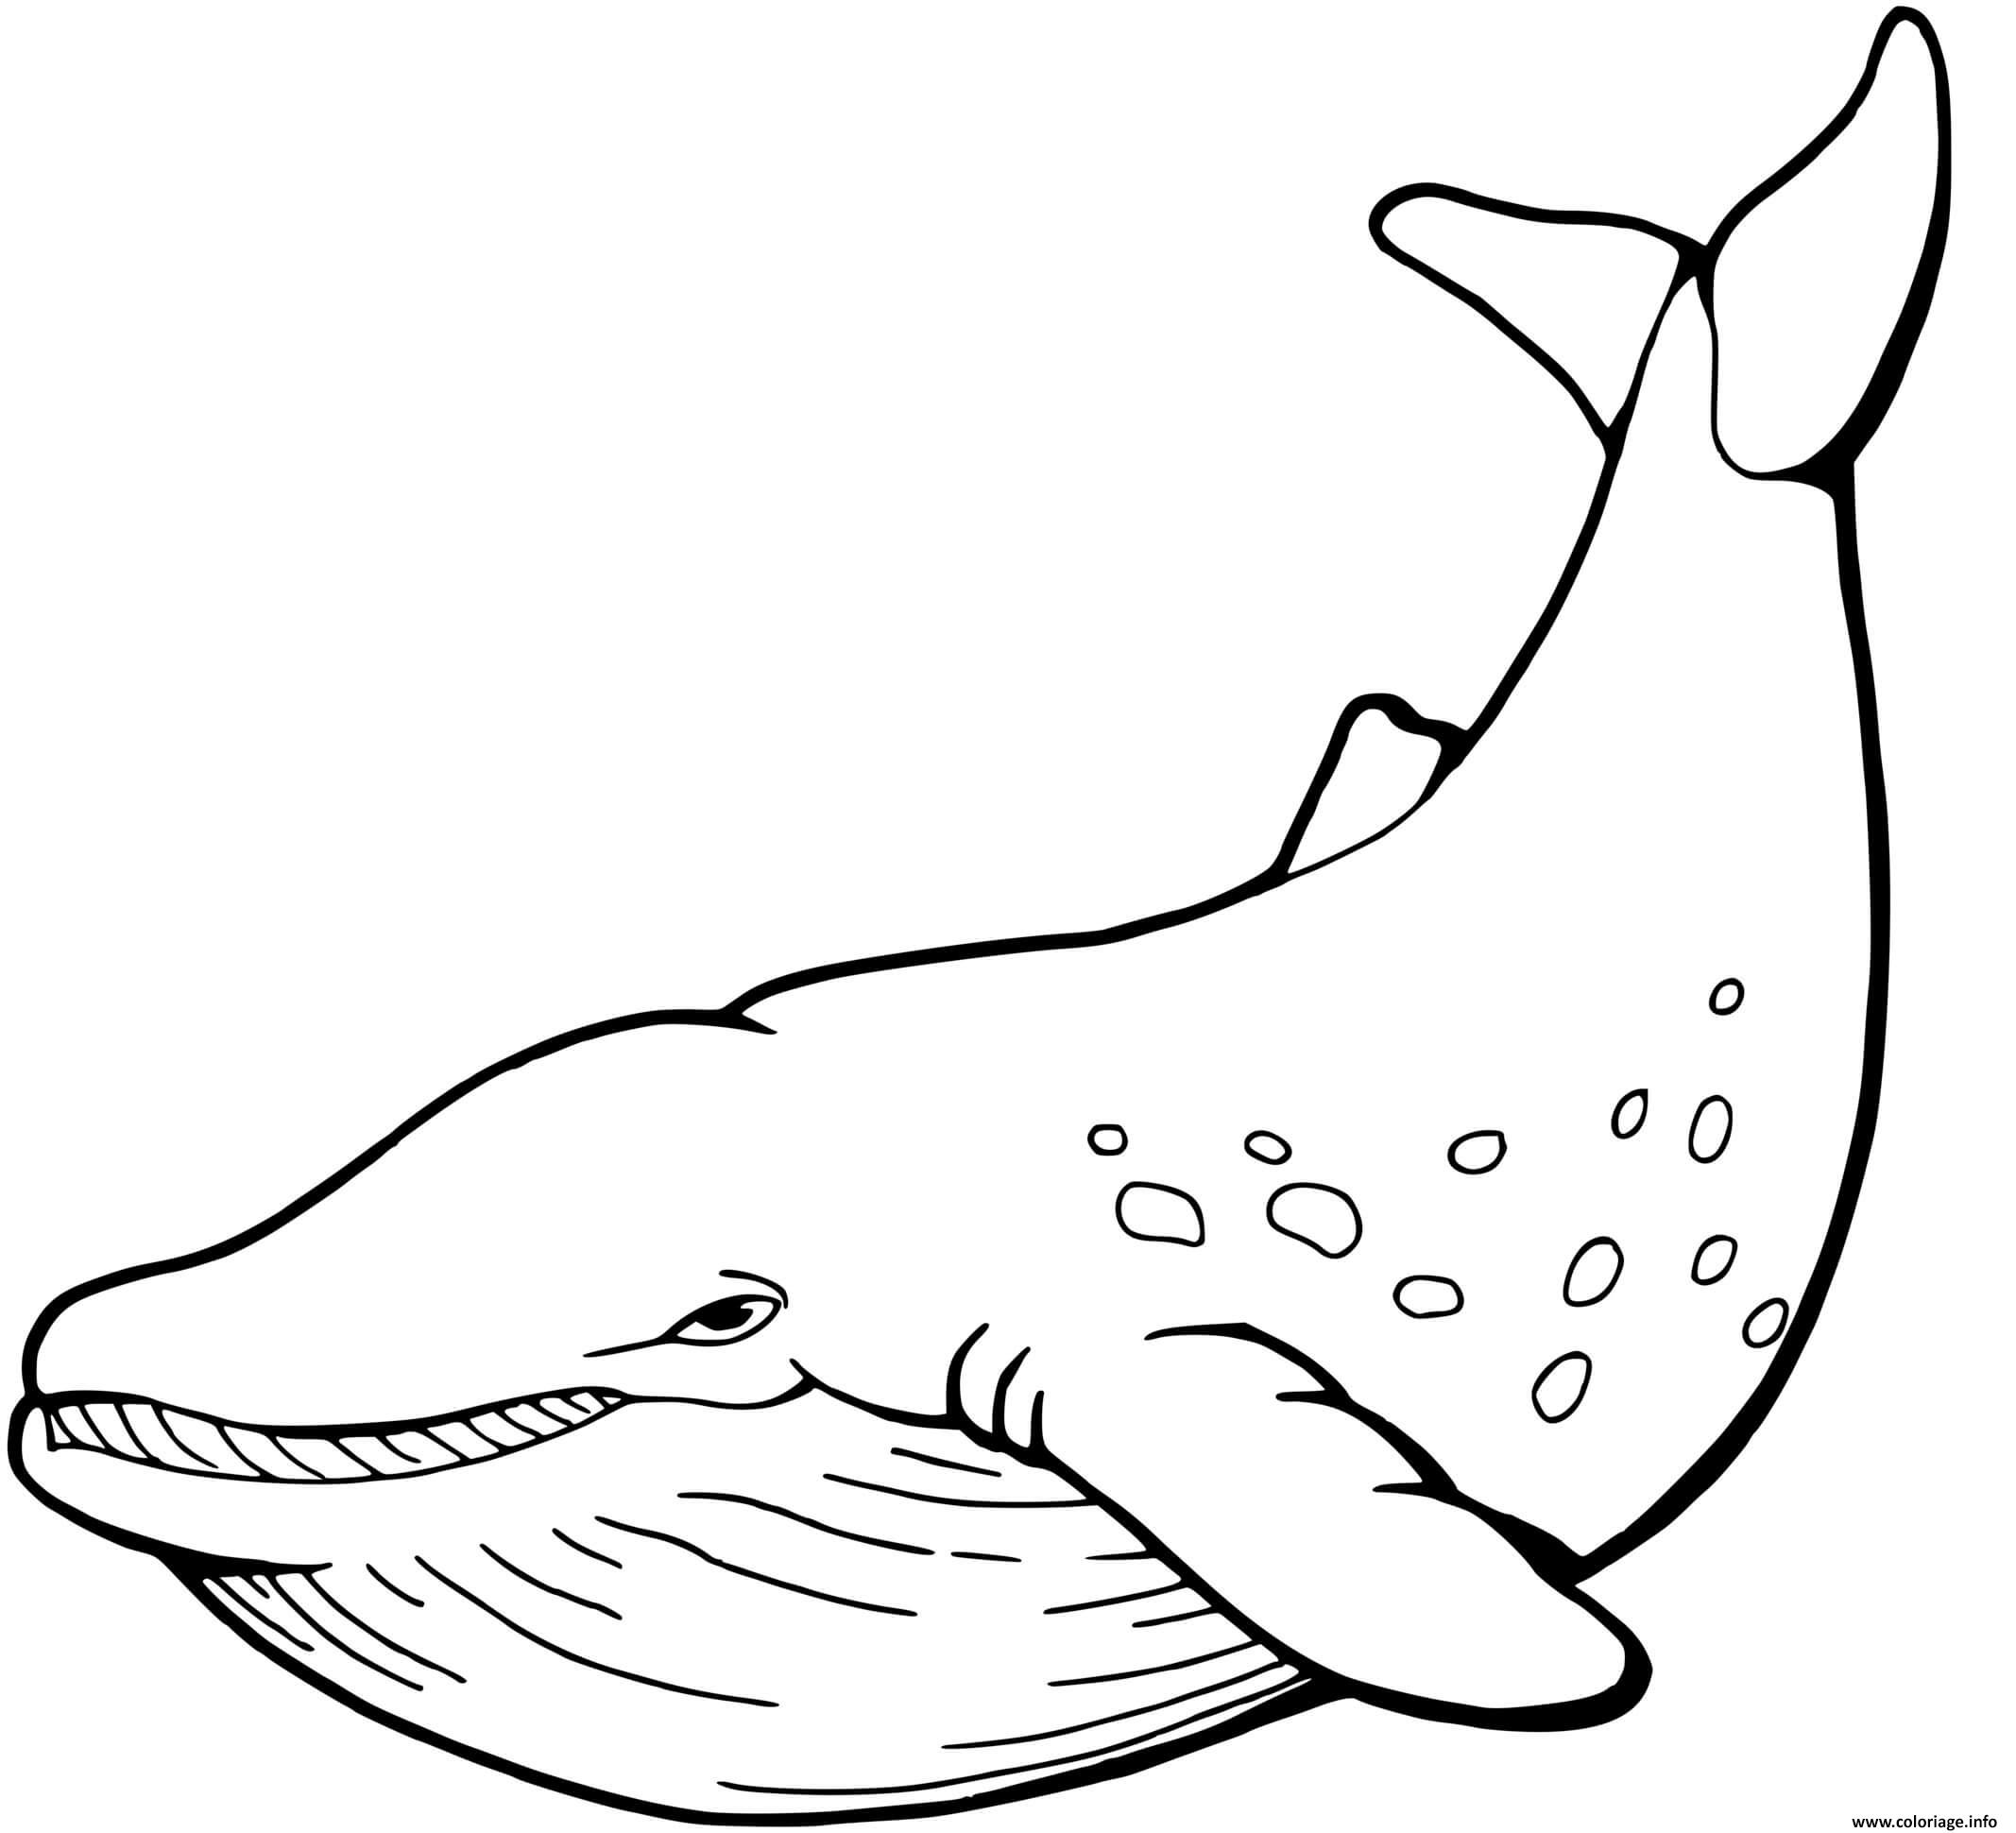 Dessin baleine a bosse animal marin Coloriage Gratuit à Imprimer